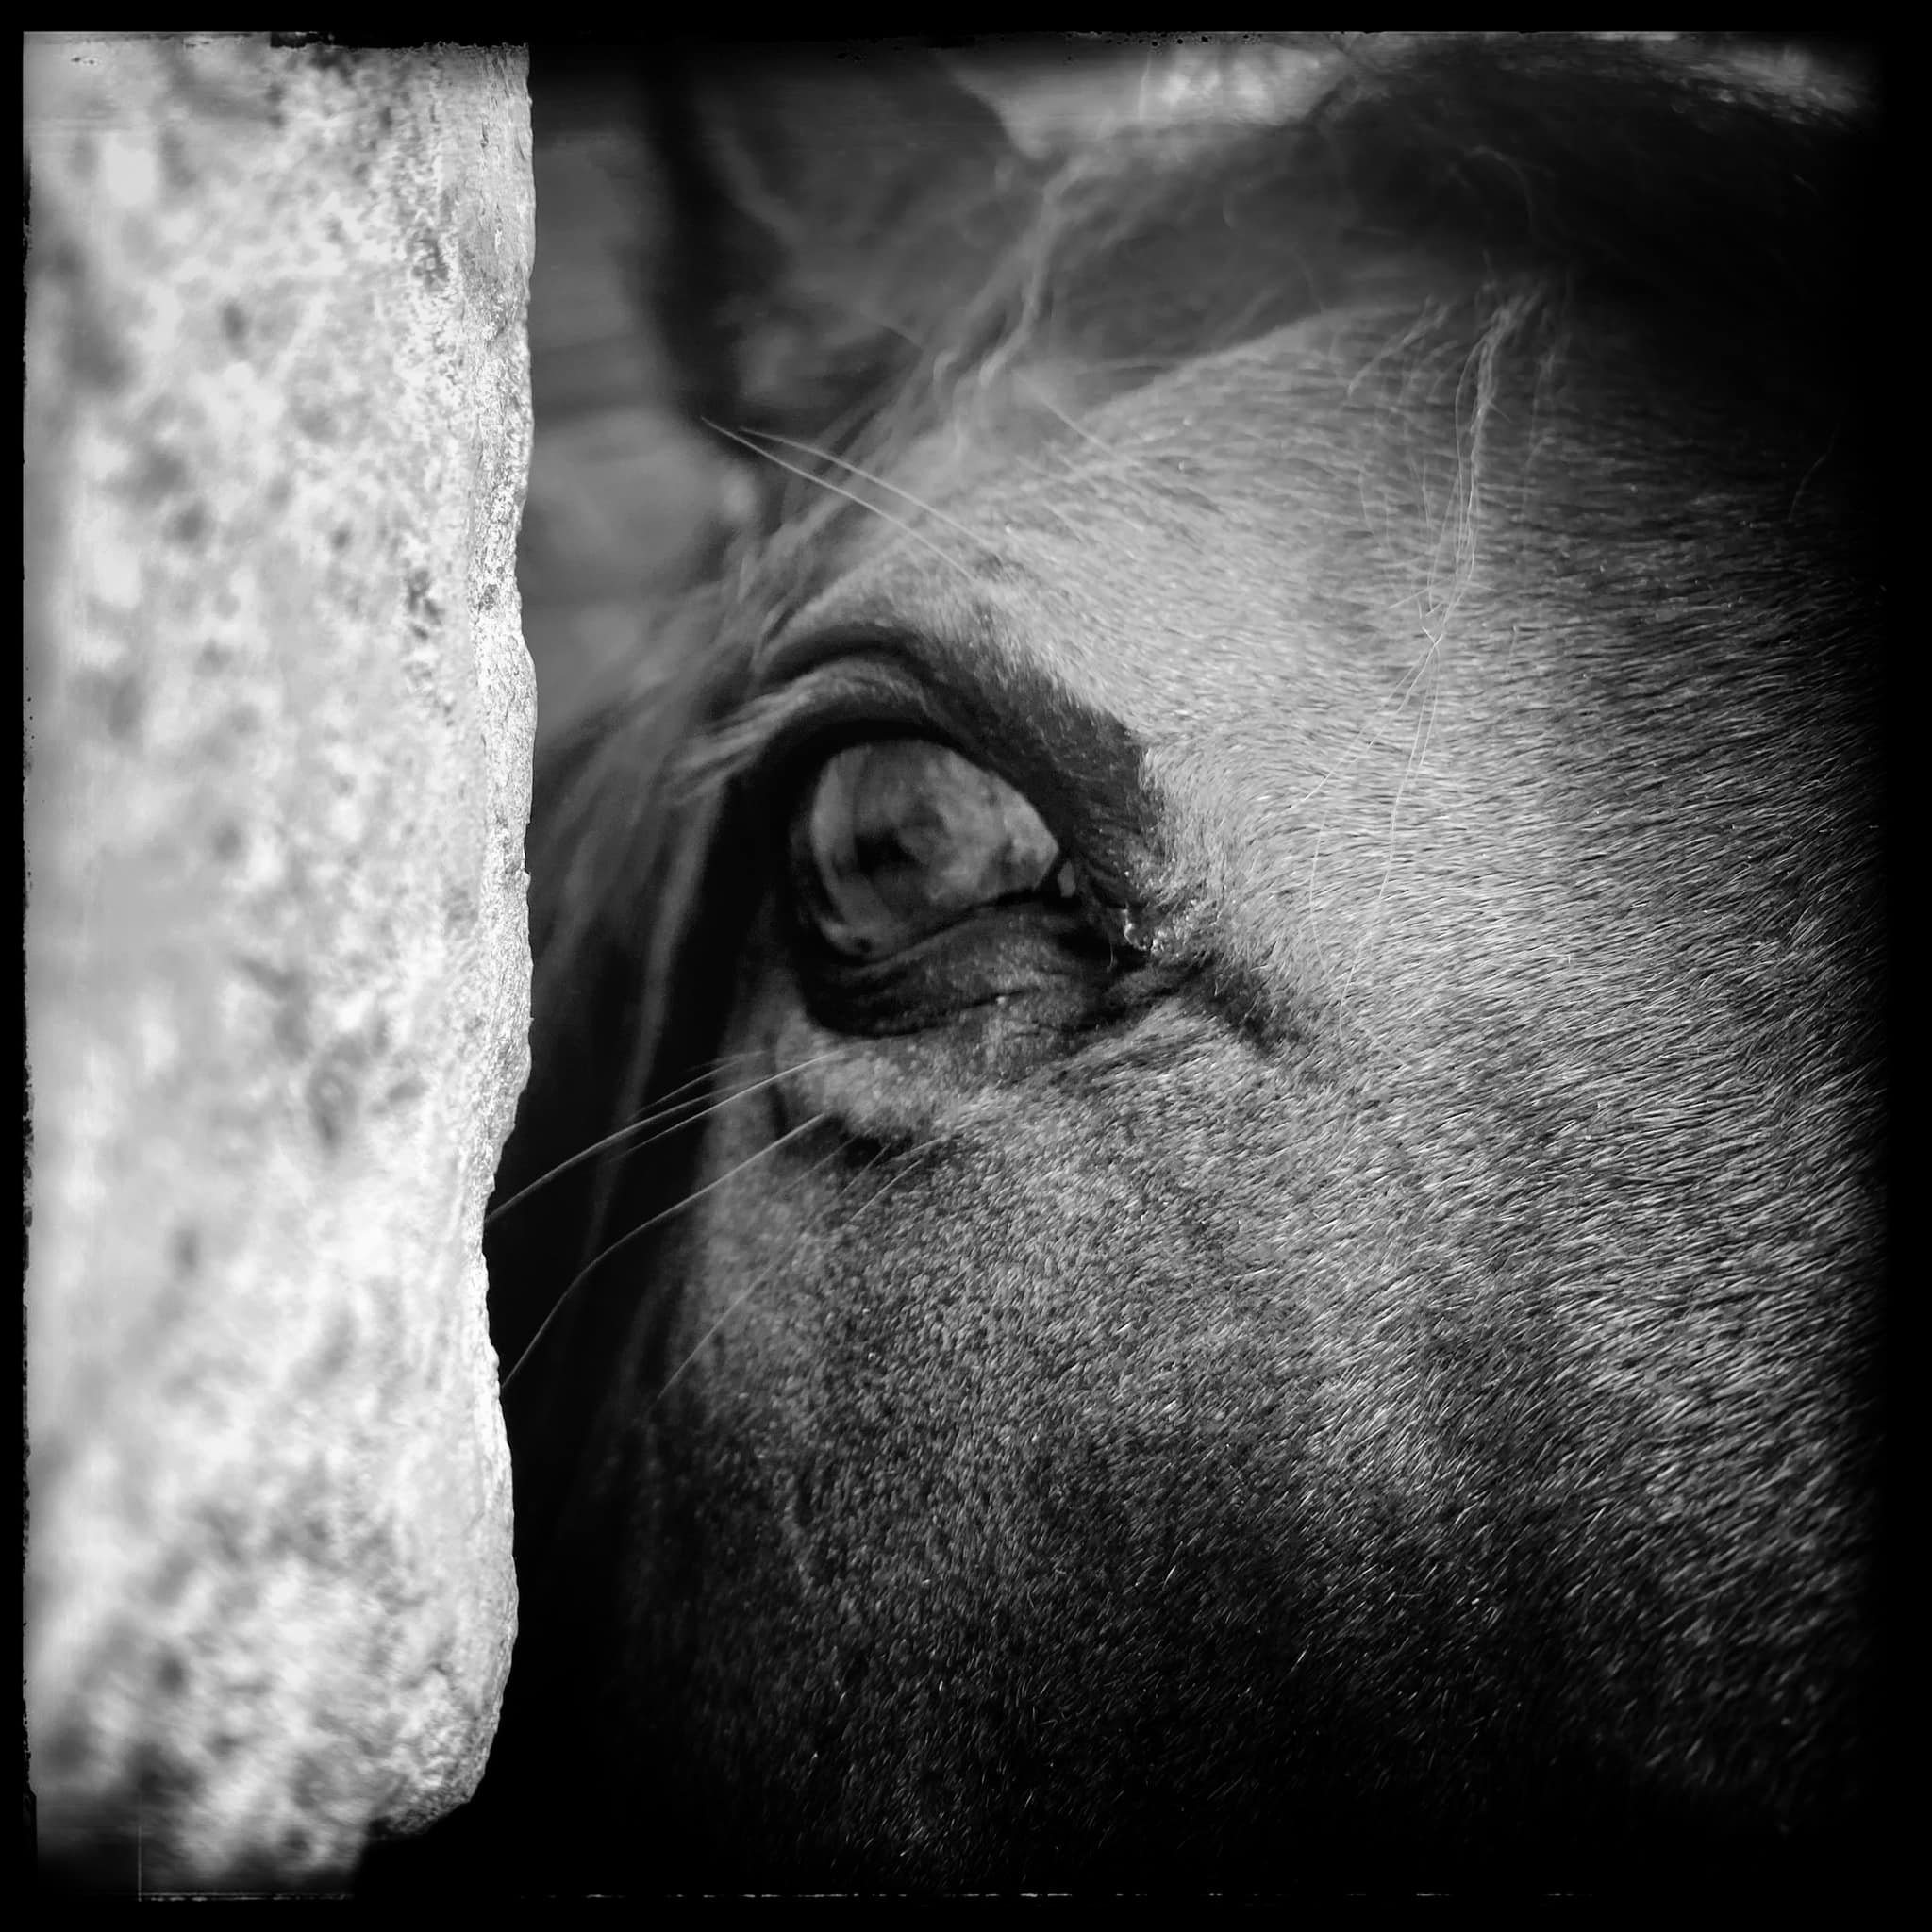 Horse detail